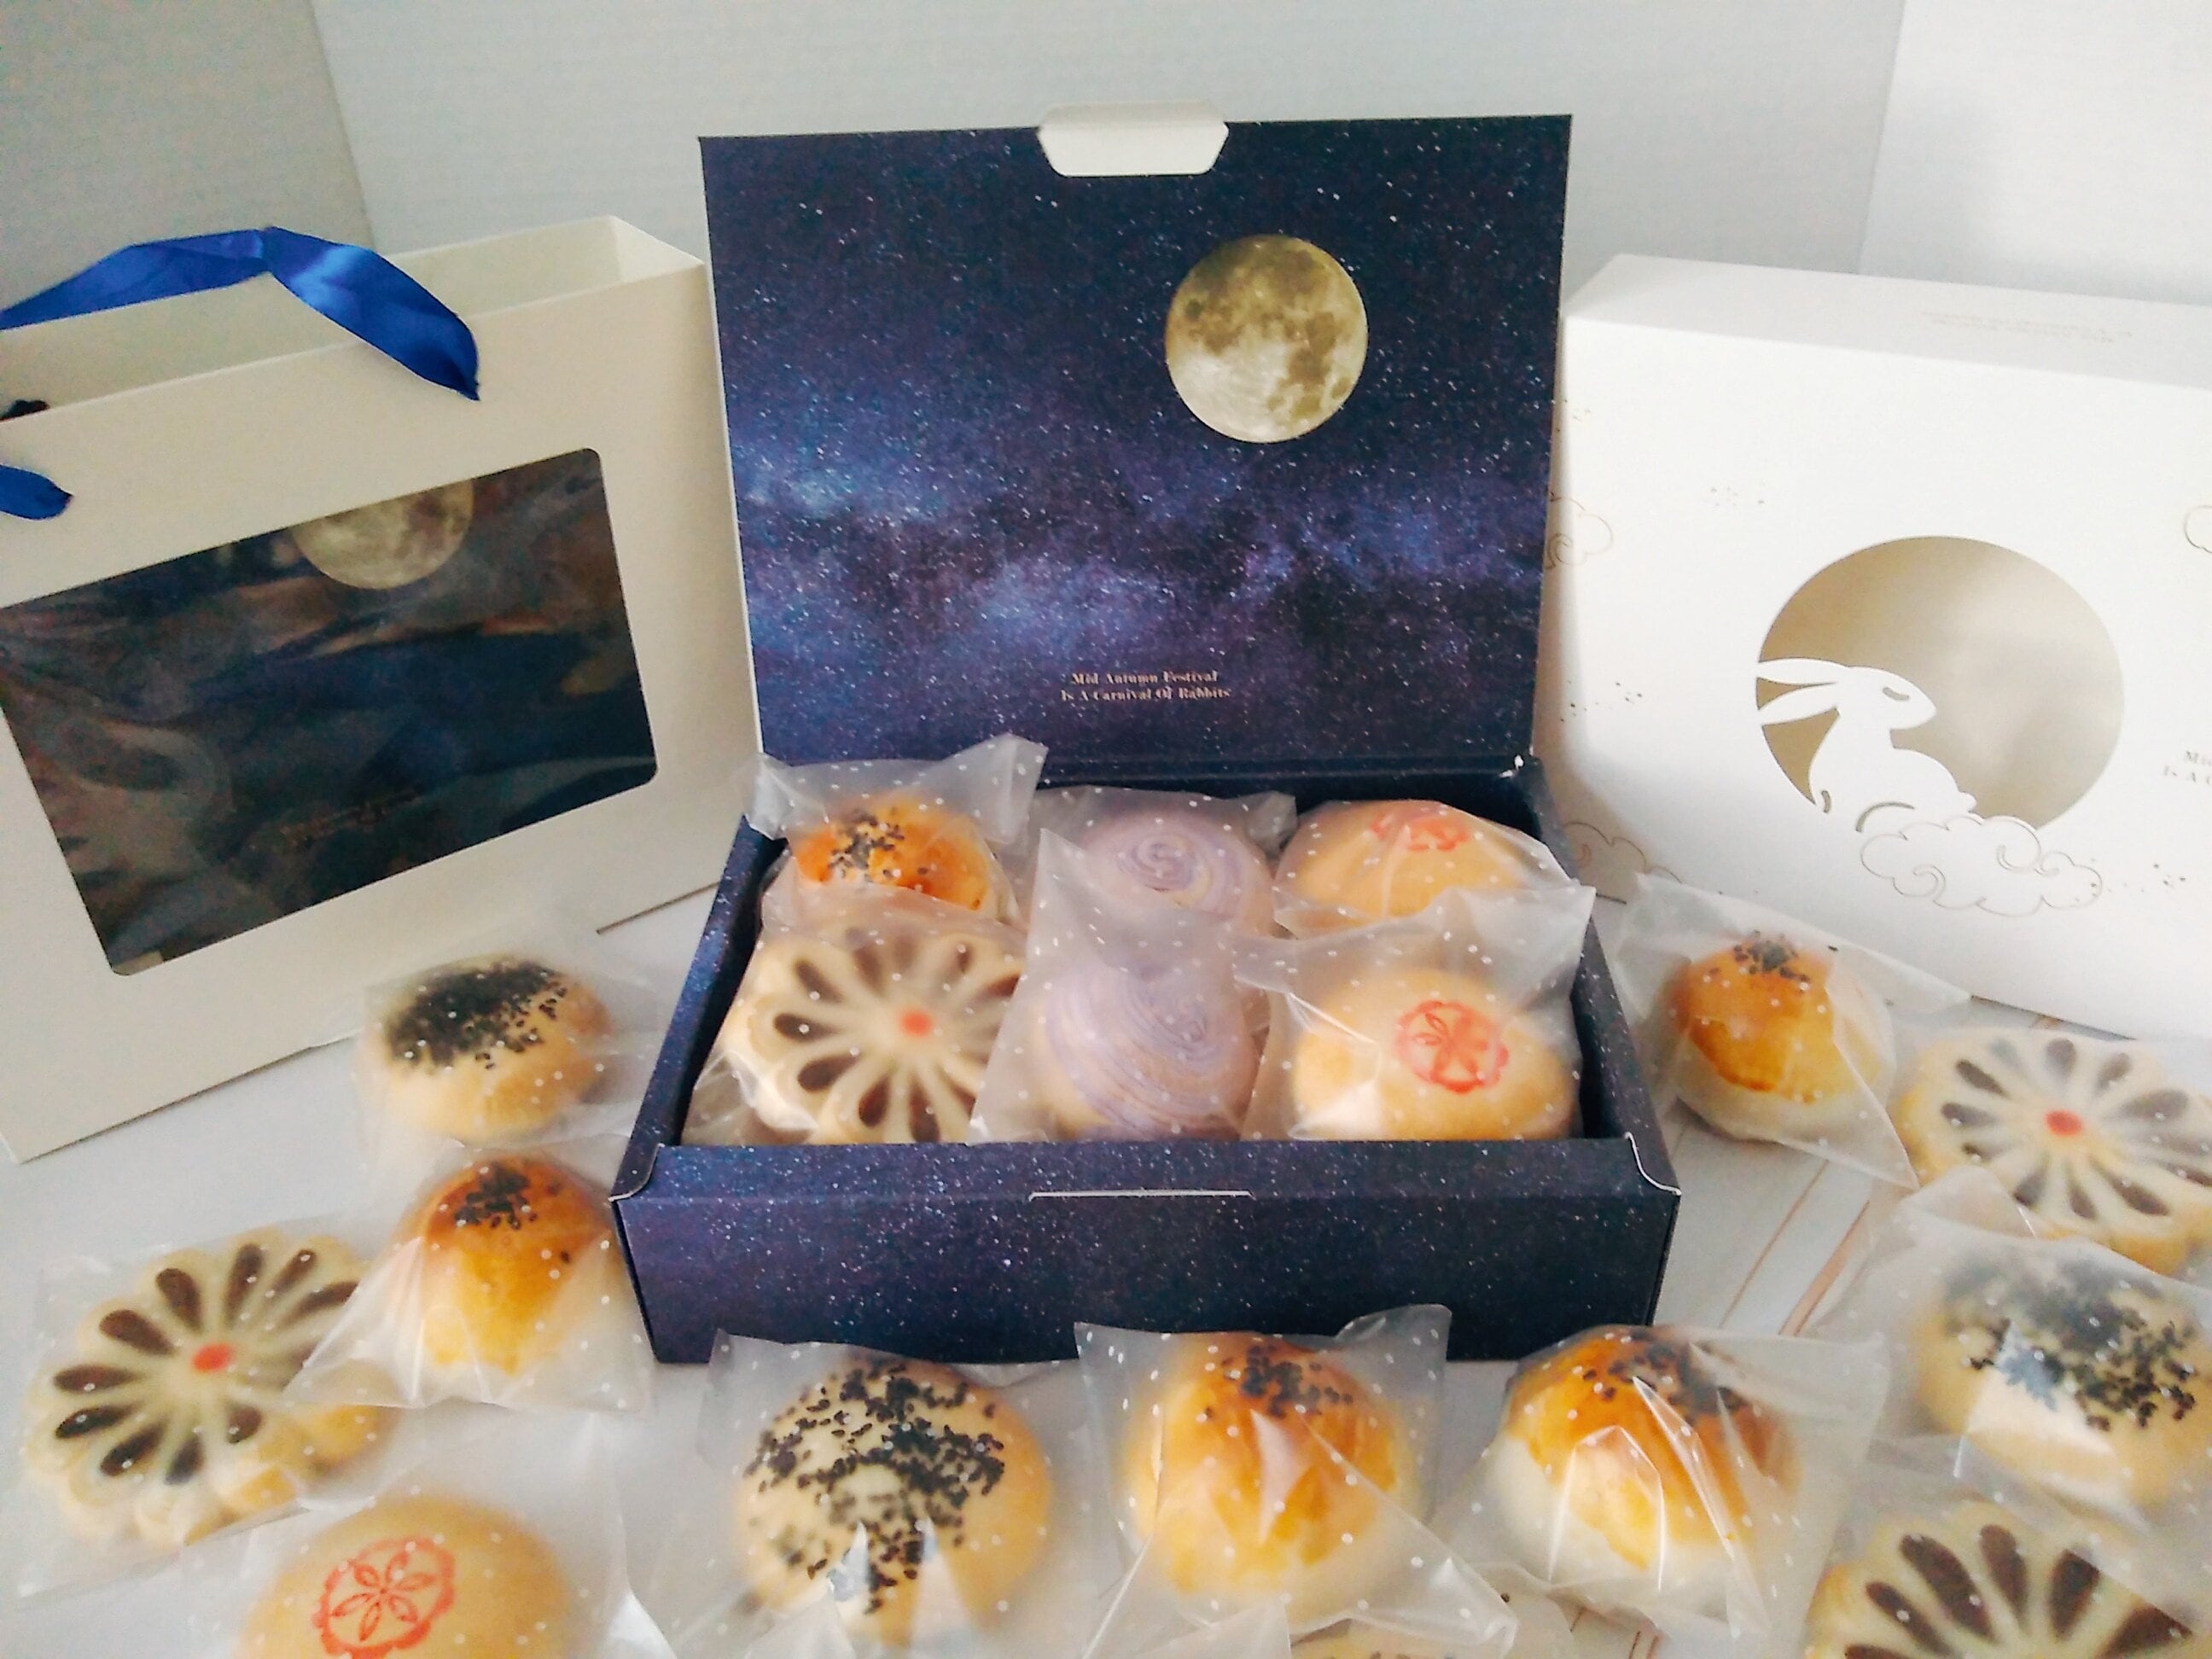 mooncake gift box